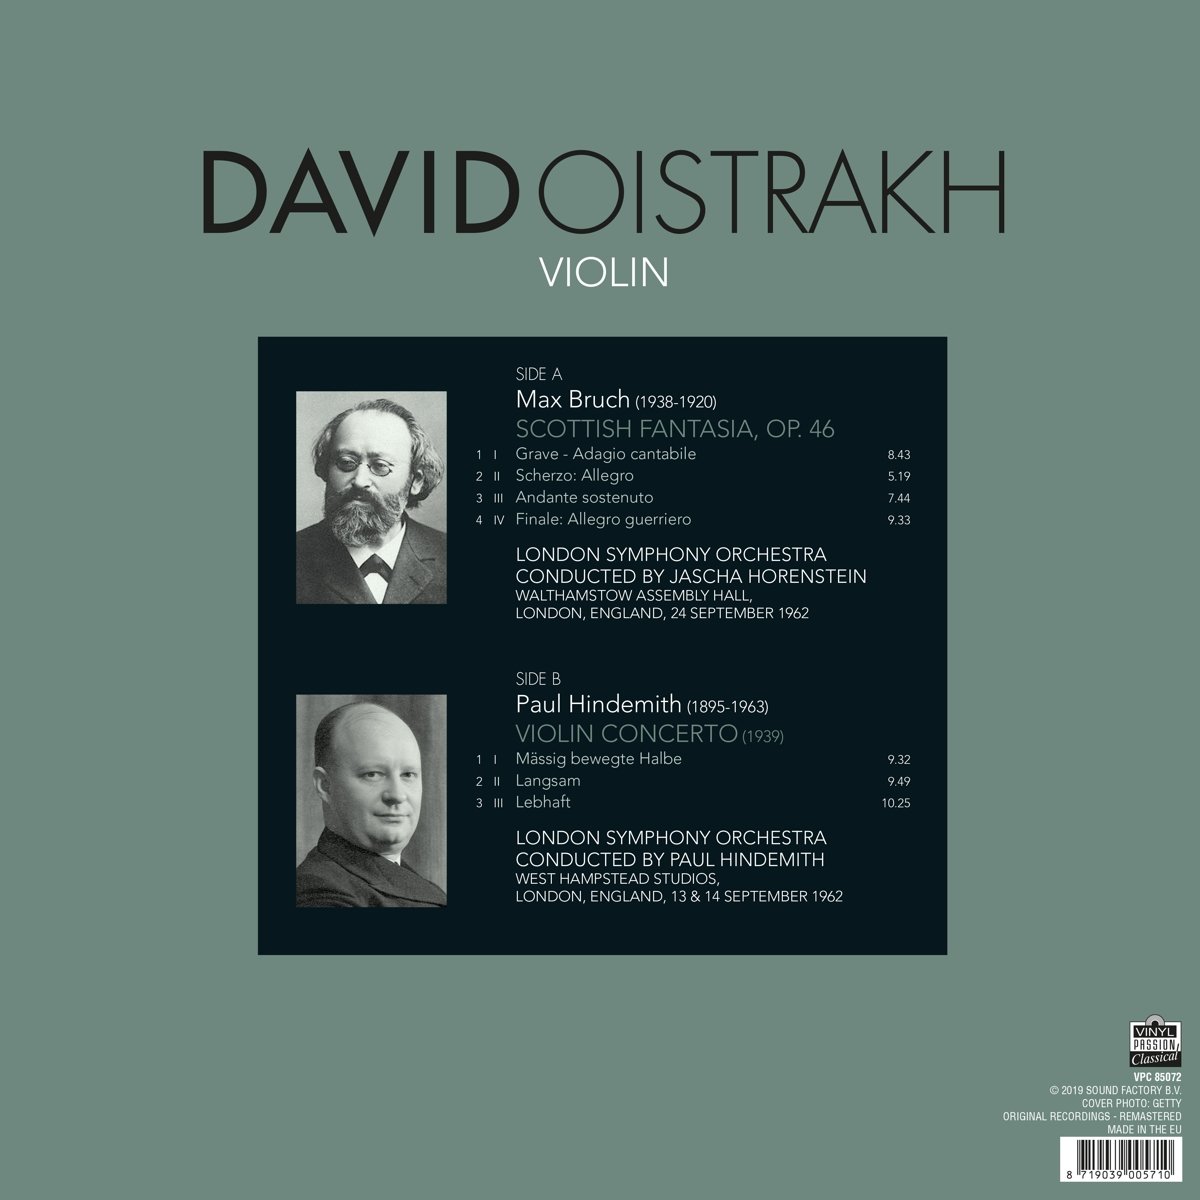 David Oistrakh 브루흐: 스코틀랜드 환상곡 / 힌데미트: 바이올린 협주곡 (Bruch: Scottish Fantasia / Hindemith: Violin Concerto) [LP]